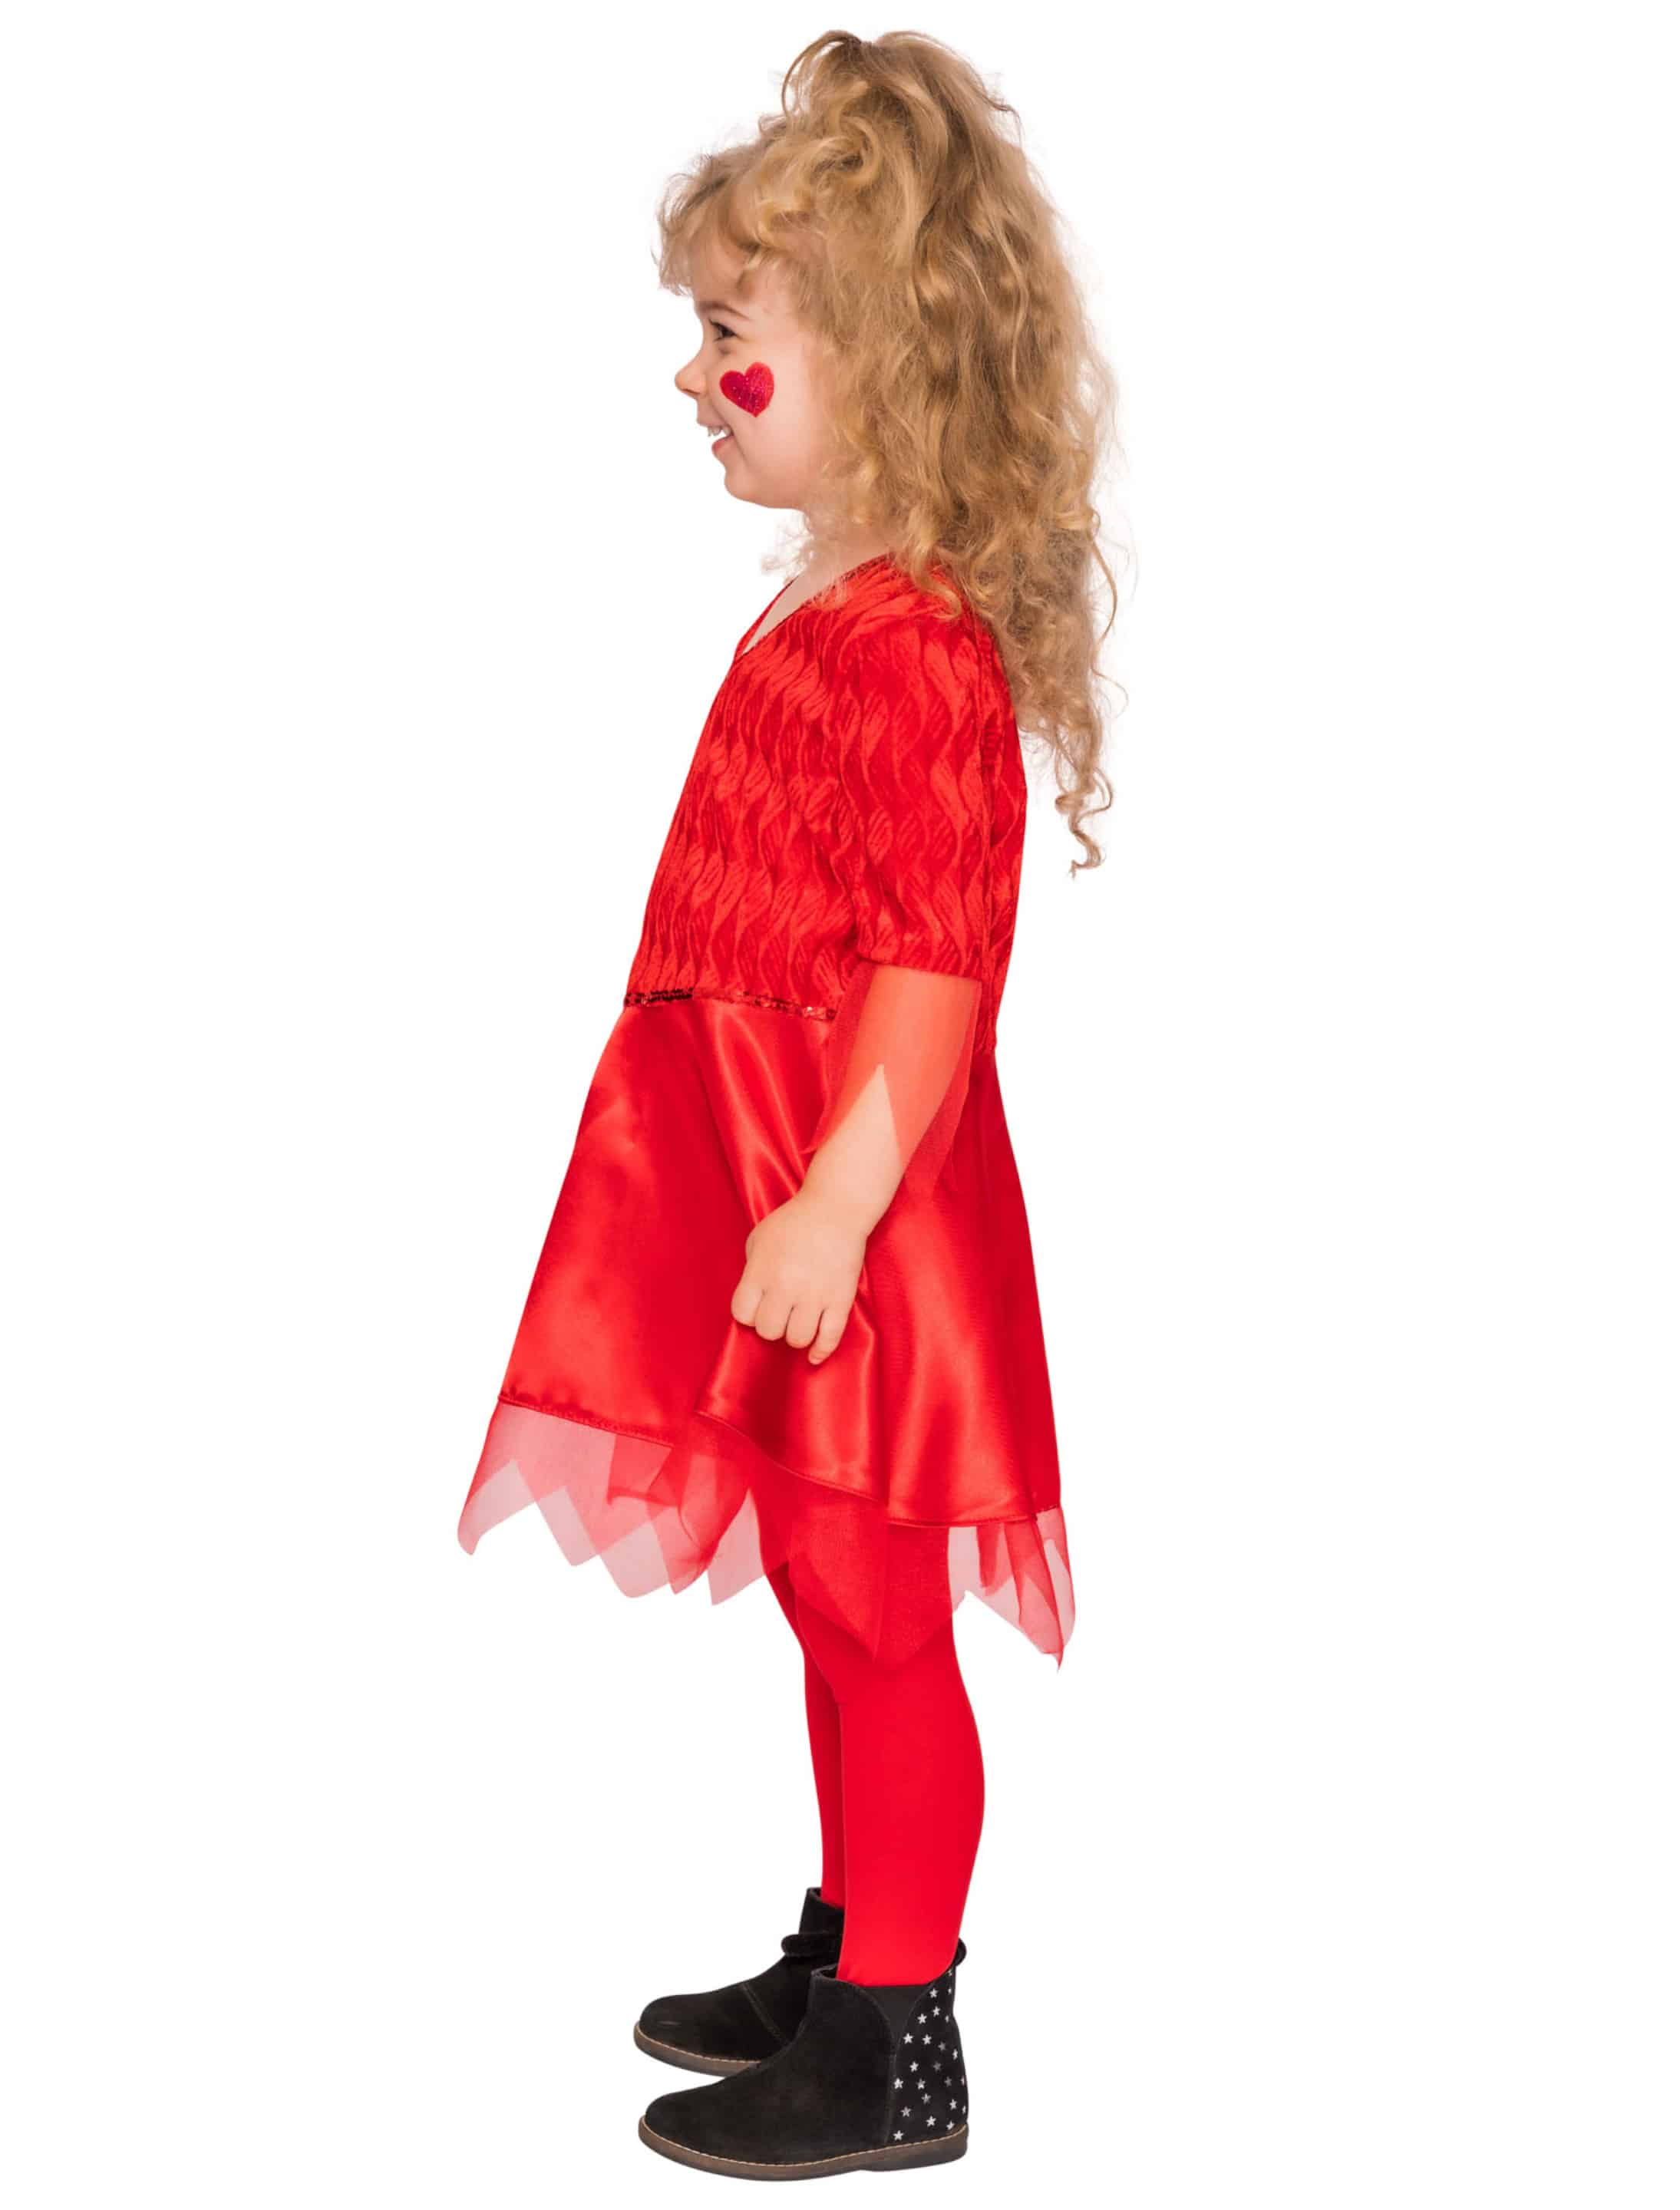 Kleid Teufel Kinder rot 128